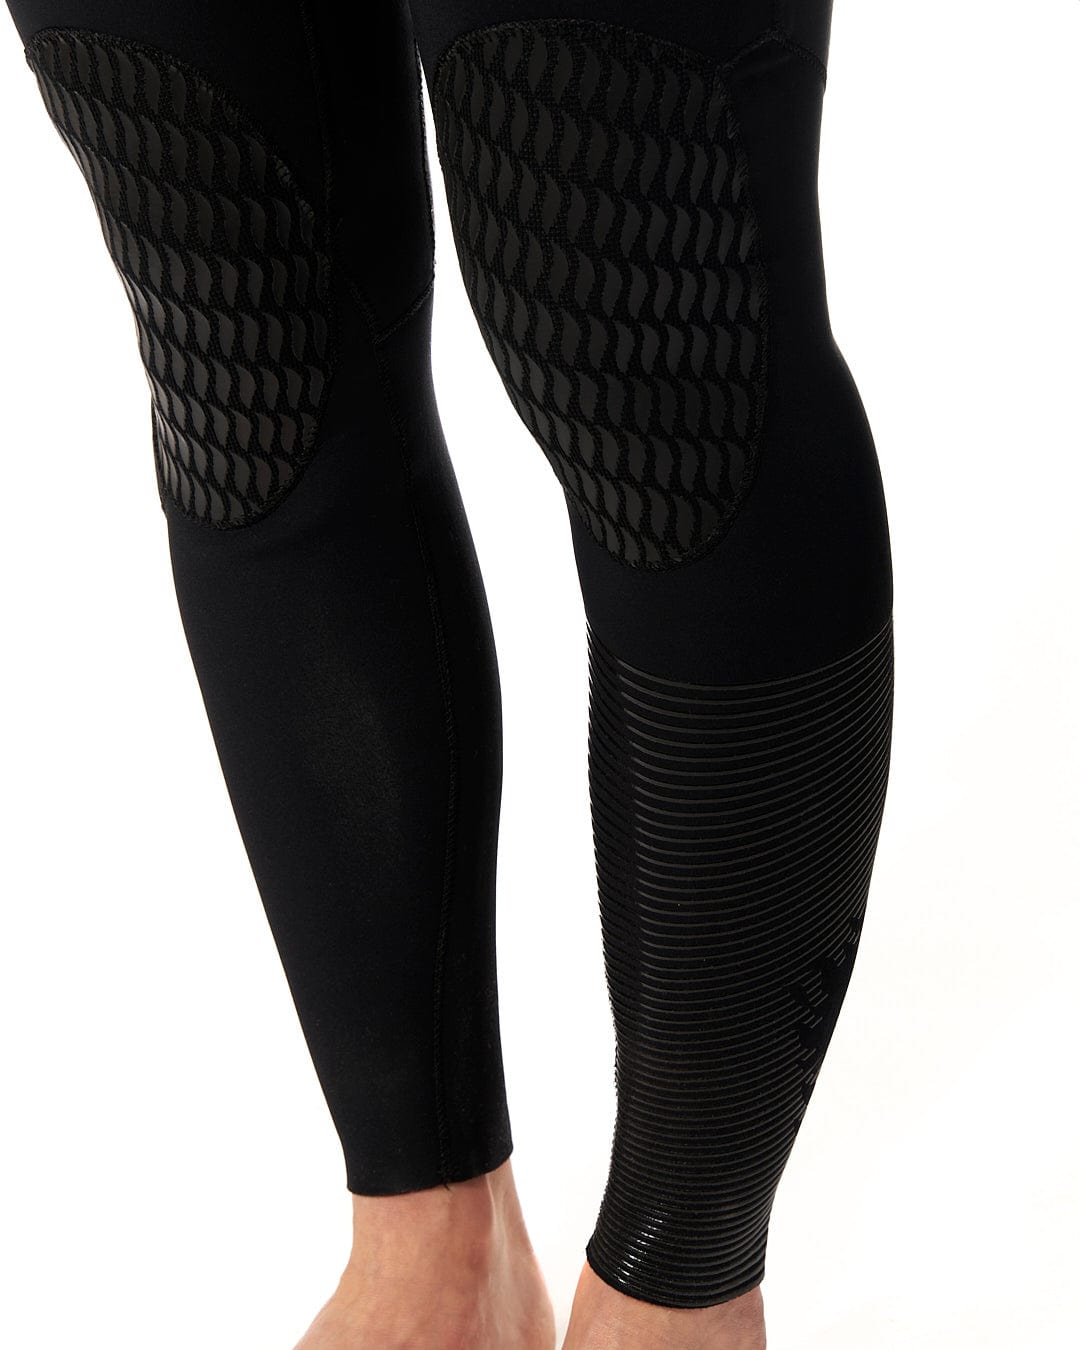 The legs of a man wearing a Saltrock Shockwave - Womens 3/2 Front Zip Full Wetsuit - Black.